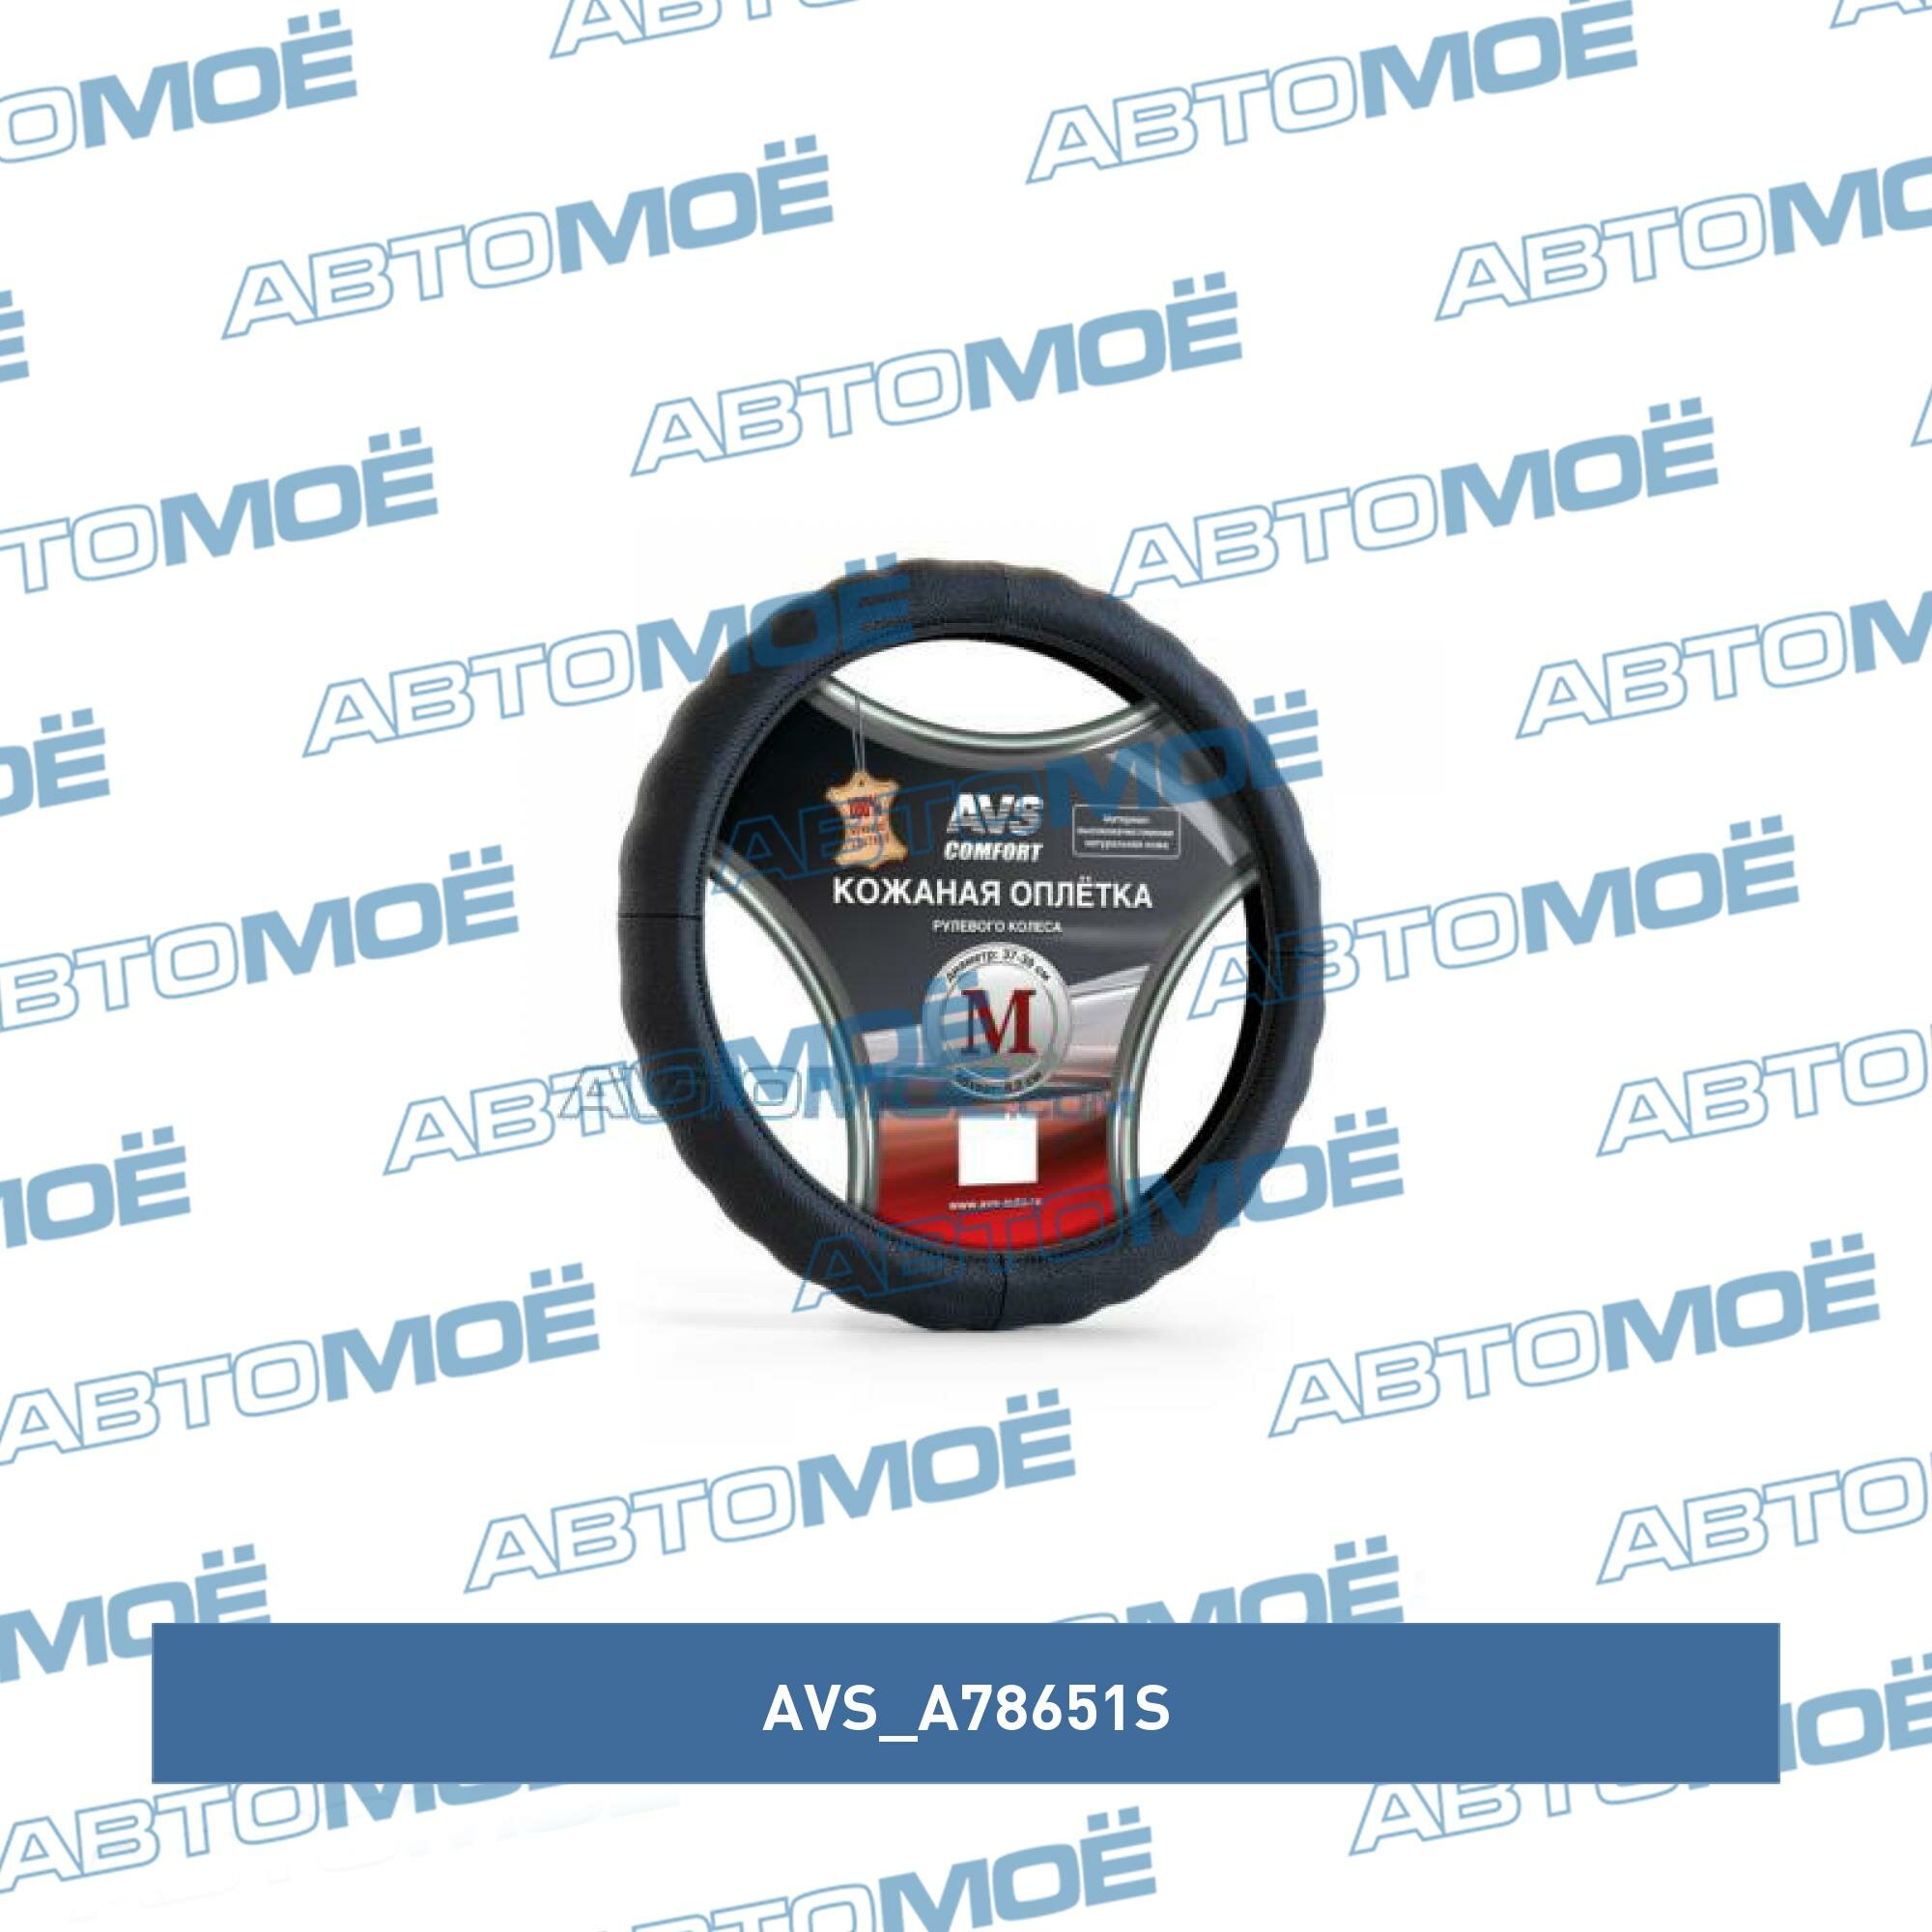 AVS A78651S Оплетка на руль (размер M черный) (натуральная кожа) AVS GL-165M-B